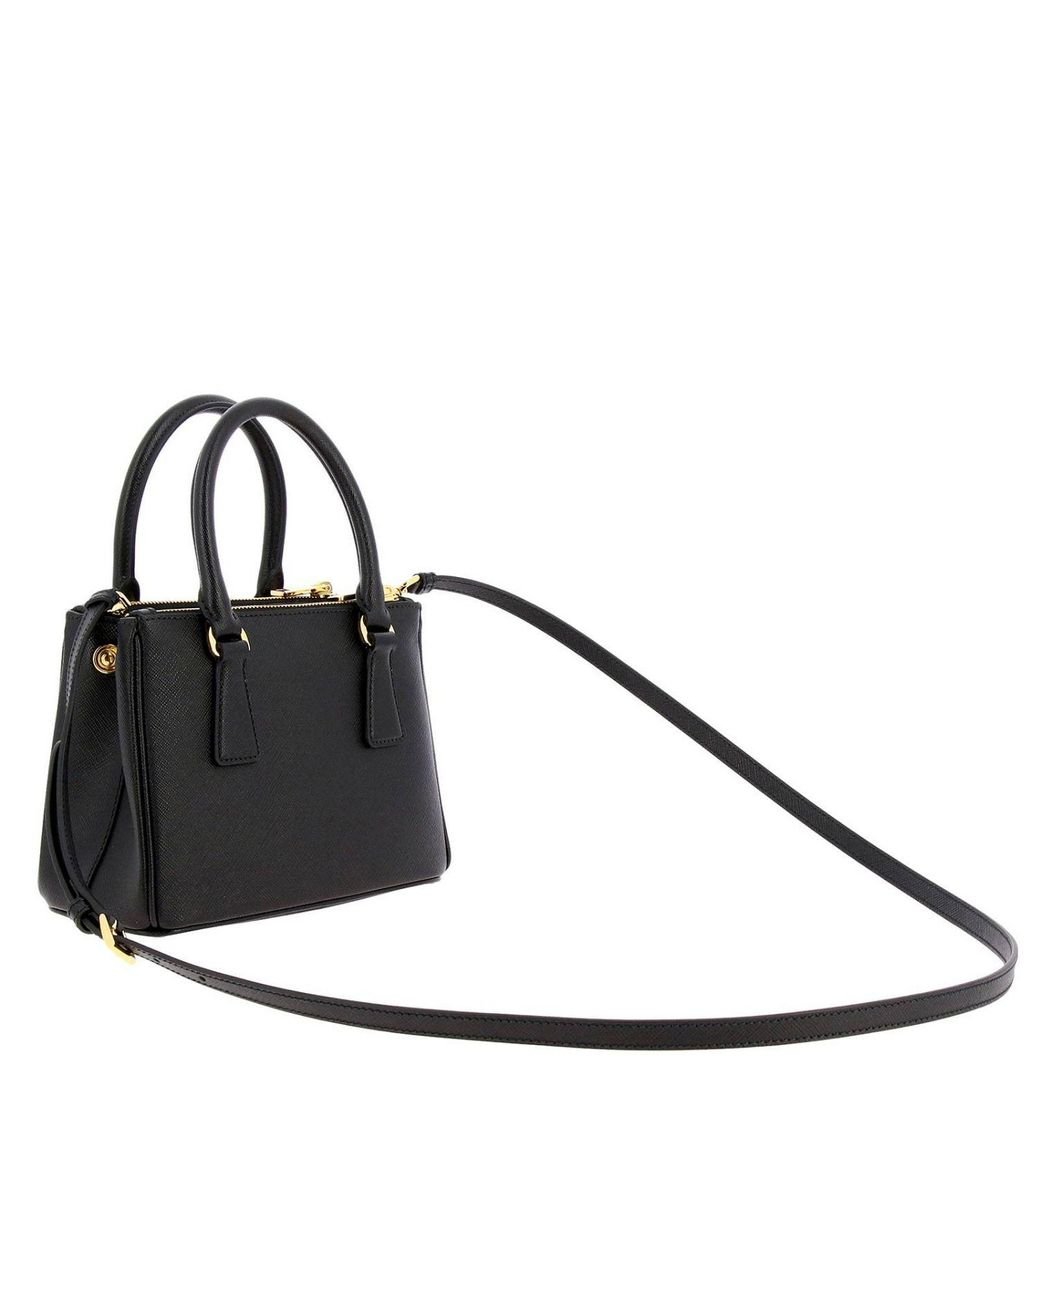 Prada Galleria Saffiano Leather Mini-bag in Black